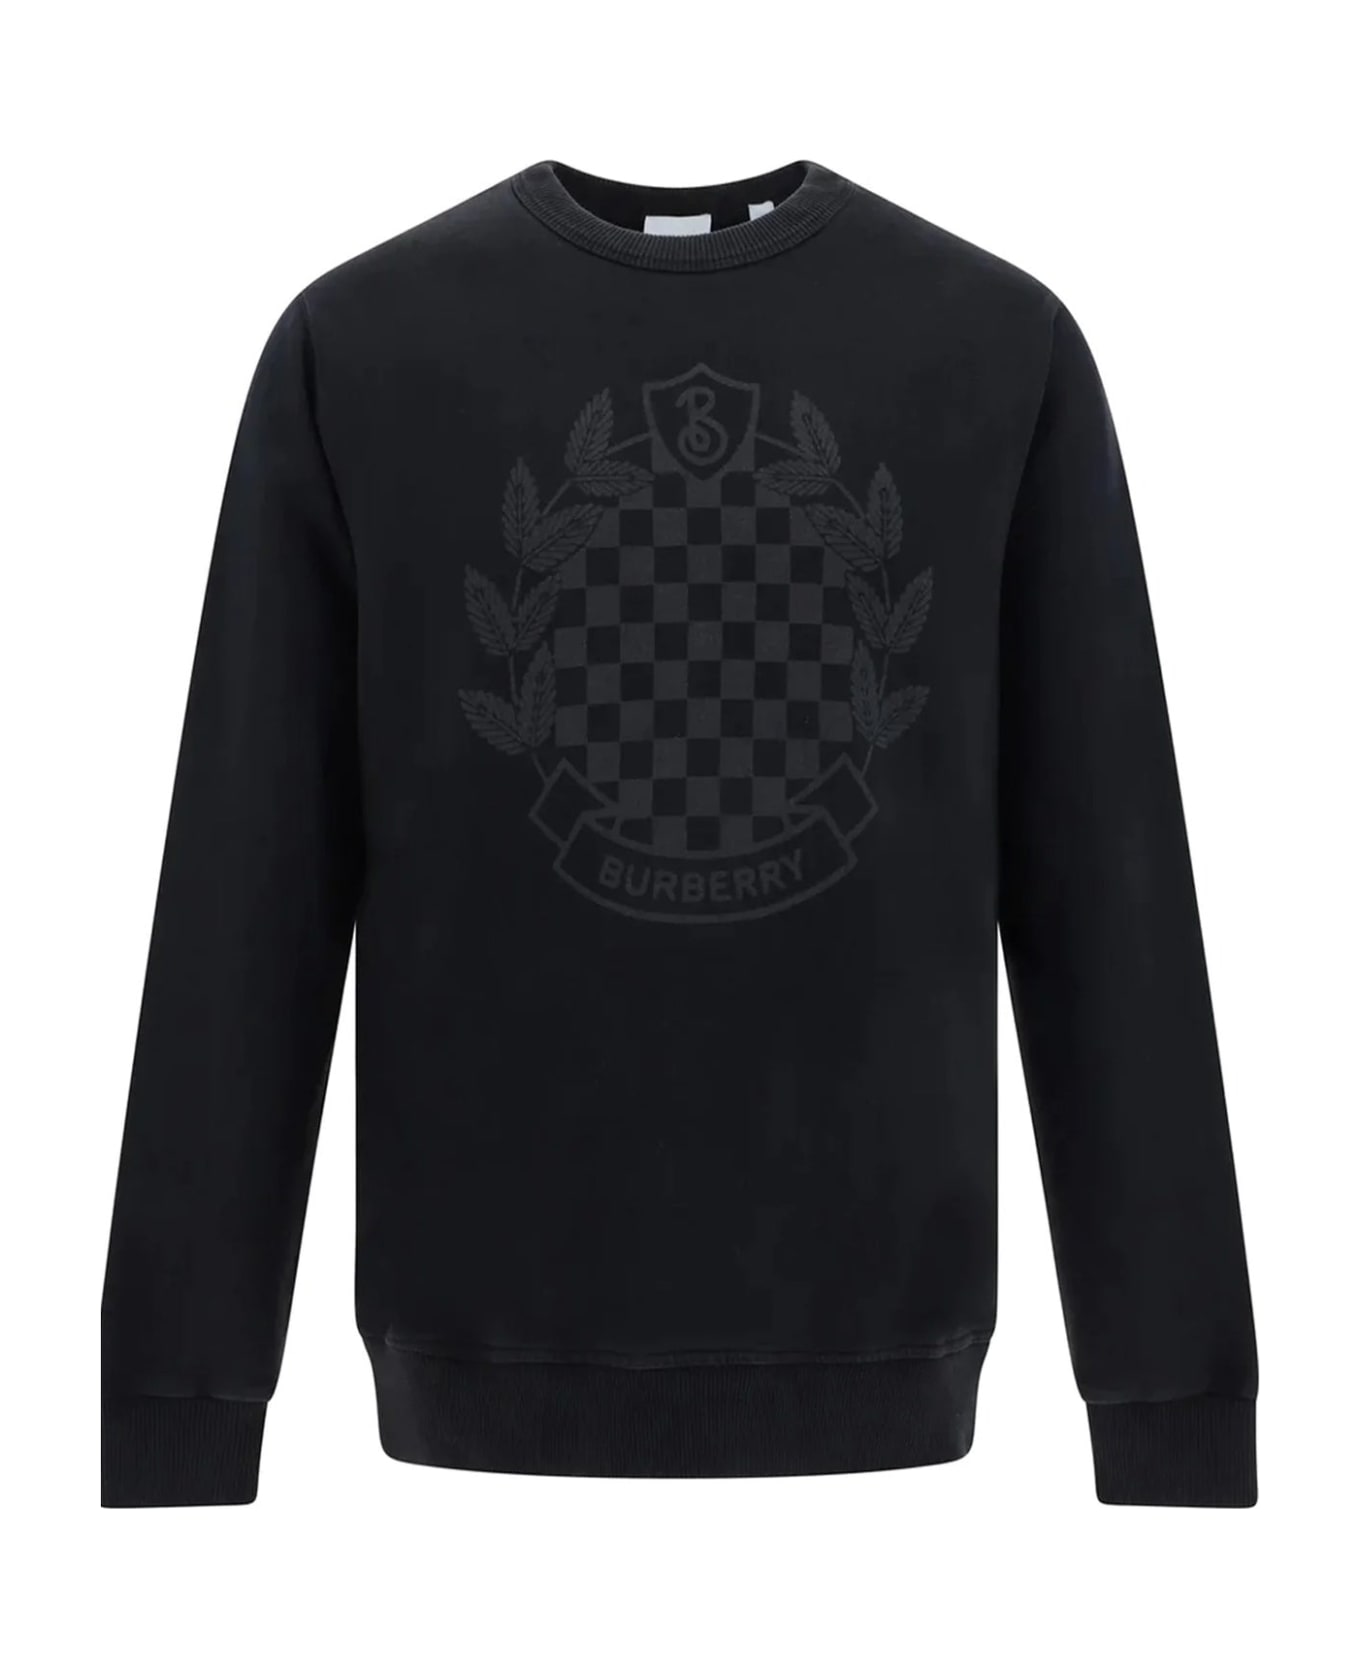 Burberry Subirton Sweatshirt - Black